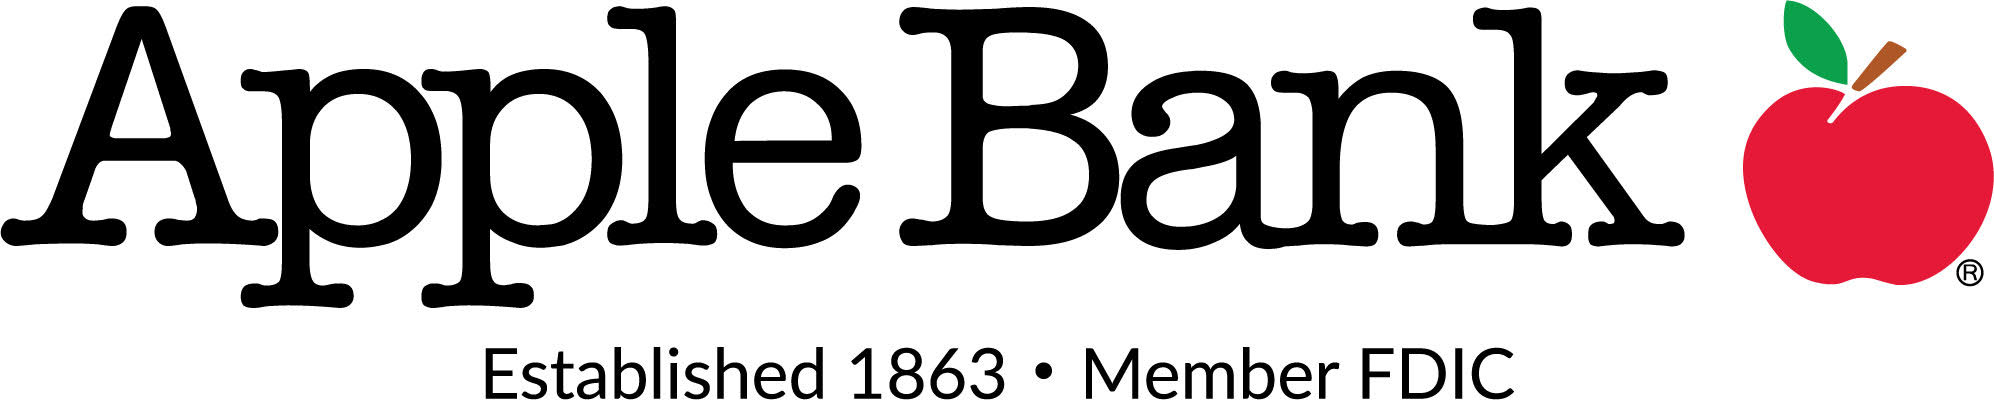 Apple Bank for Savings Logo